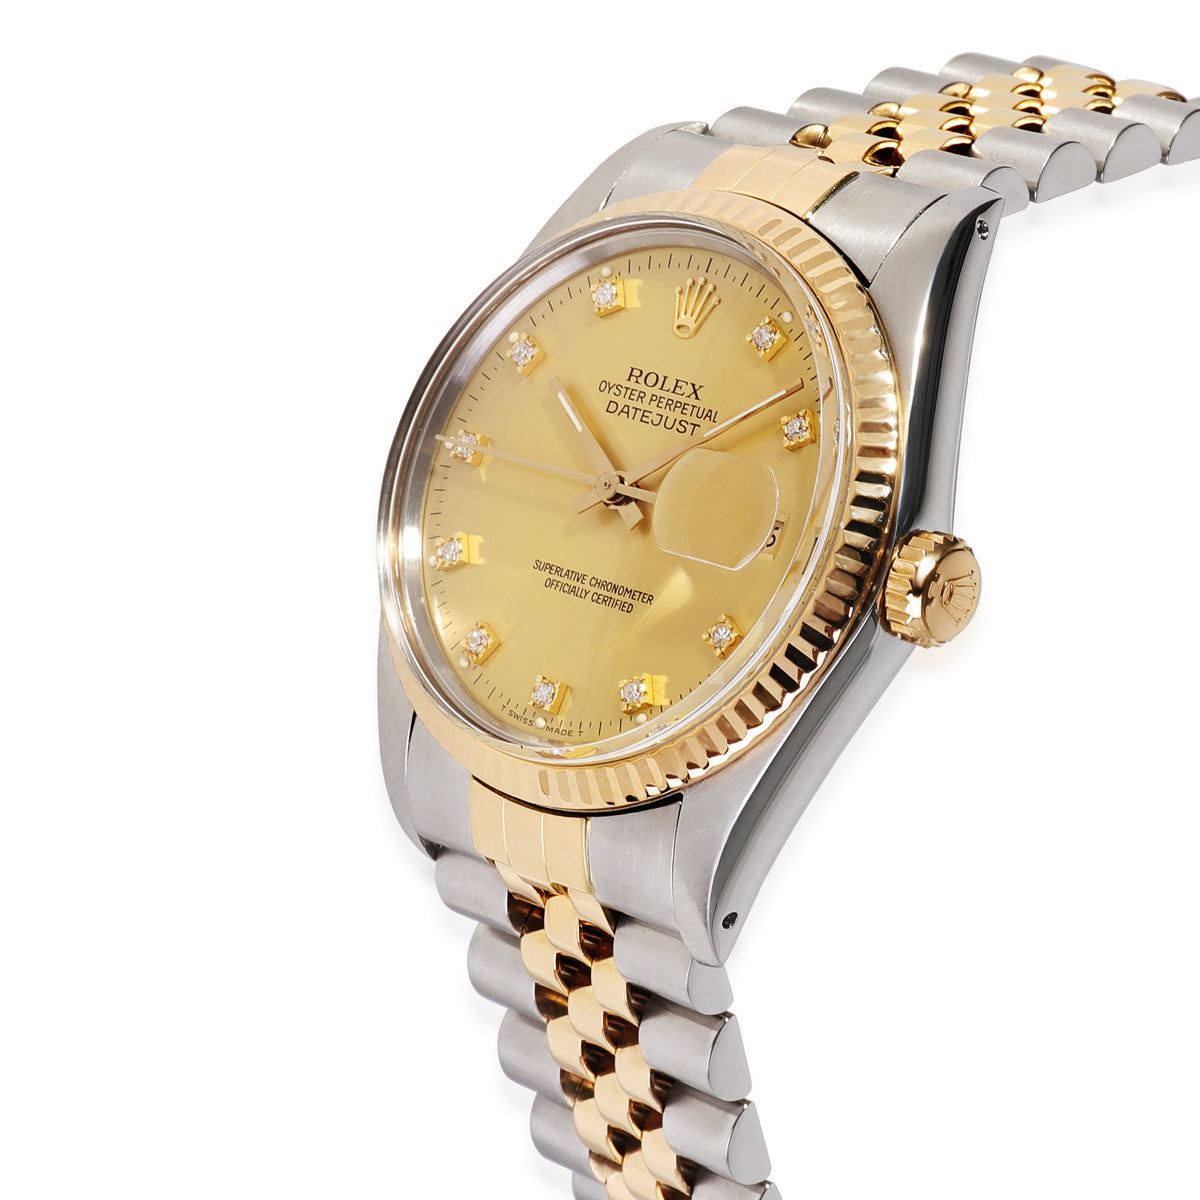 Rolex Datejust 16013 Men's Watch in 18kt Stainless Steel/Yellow Gold